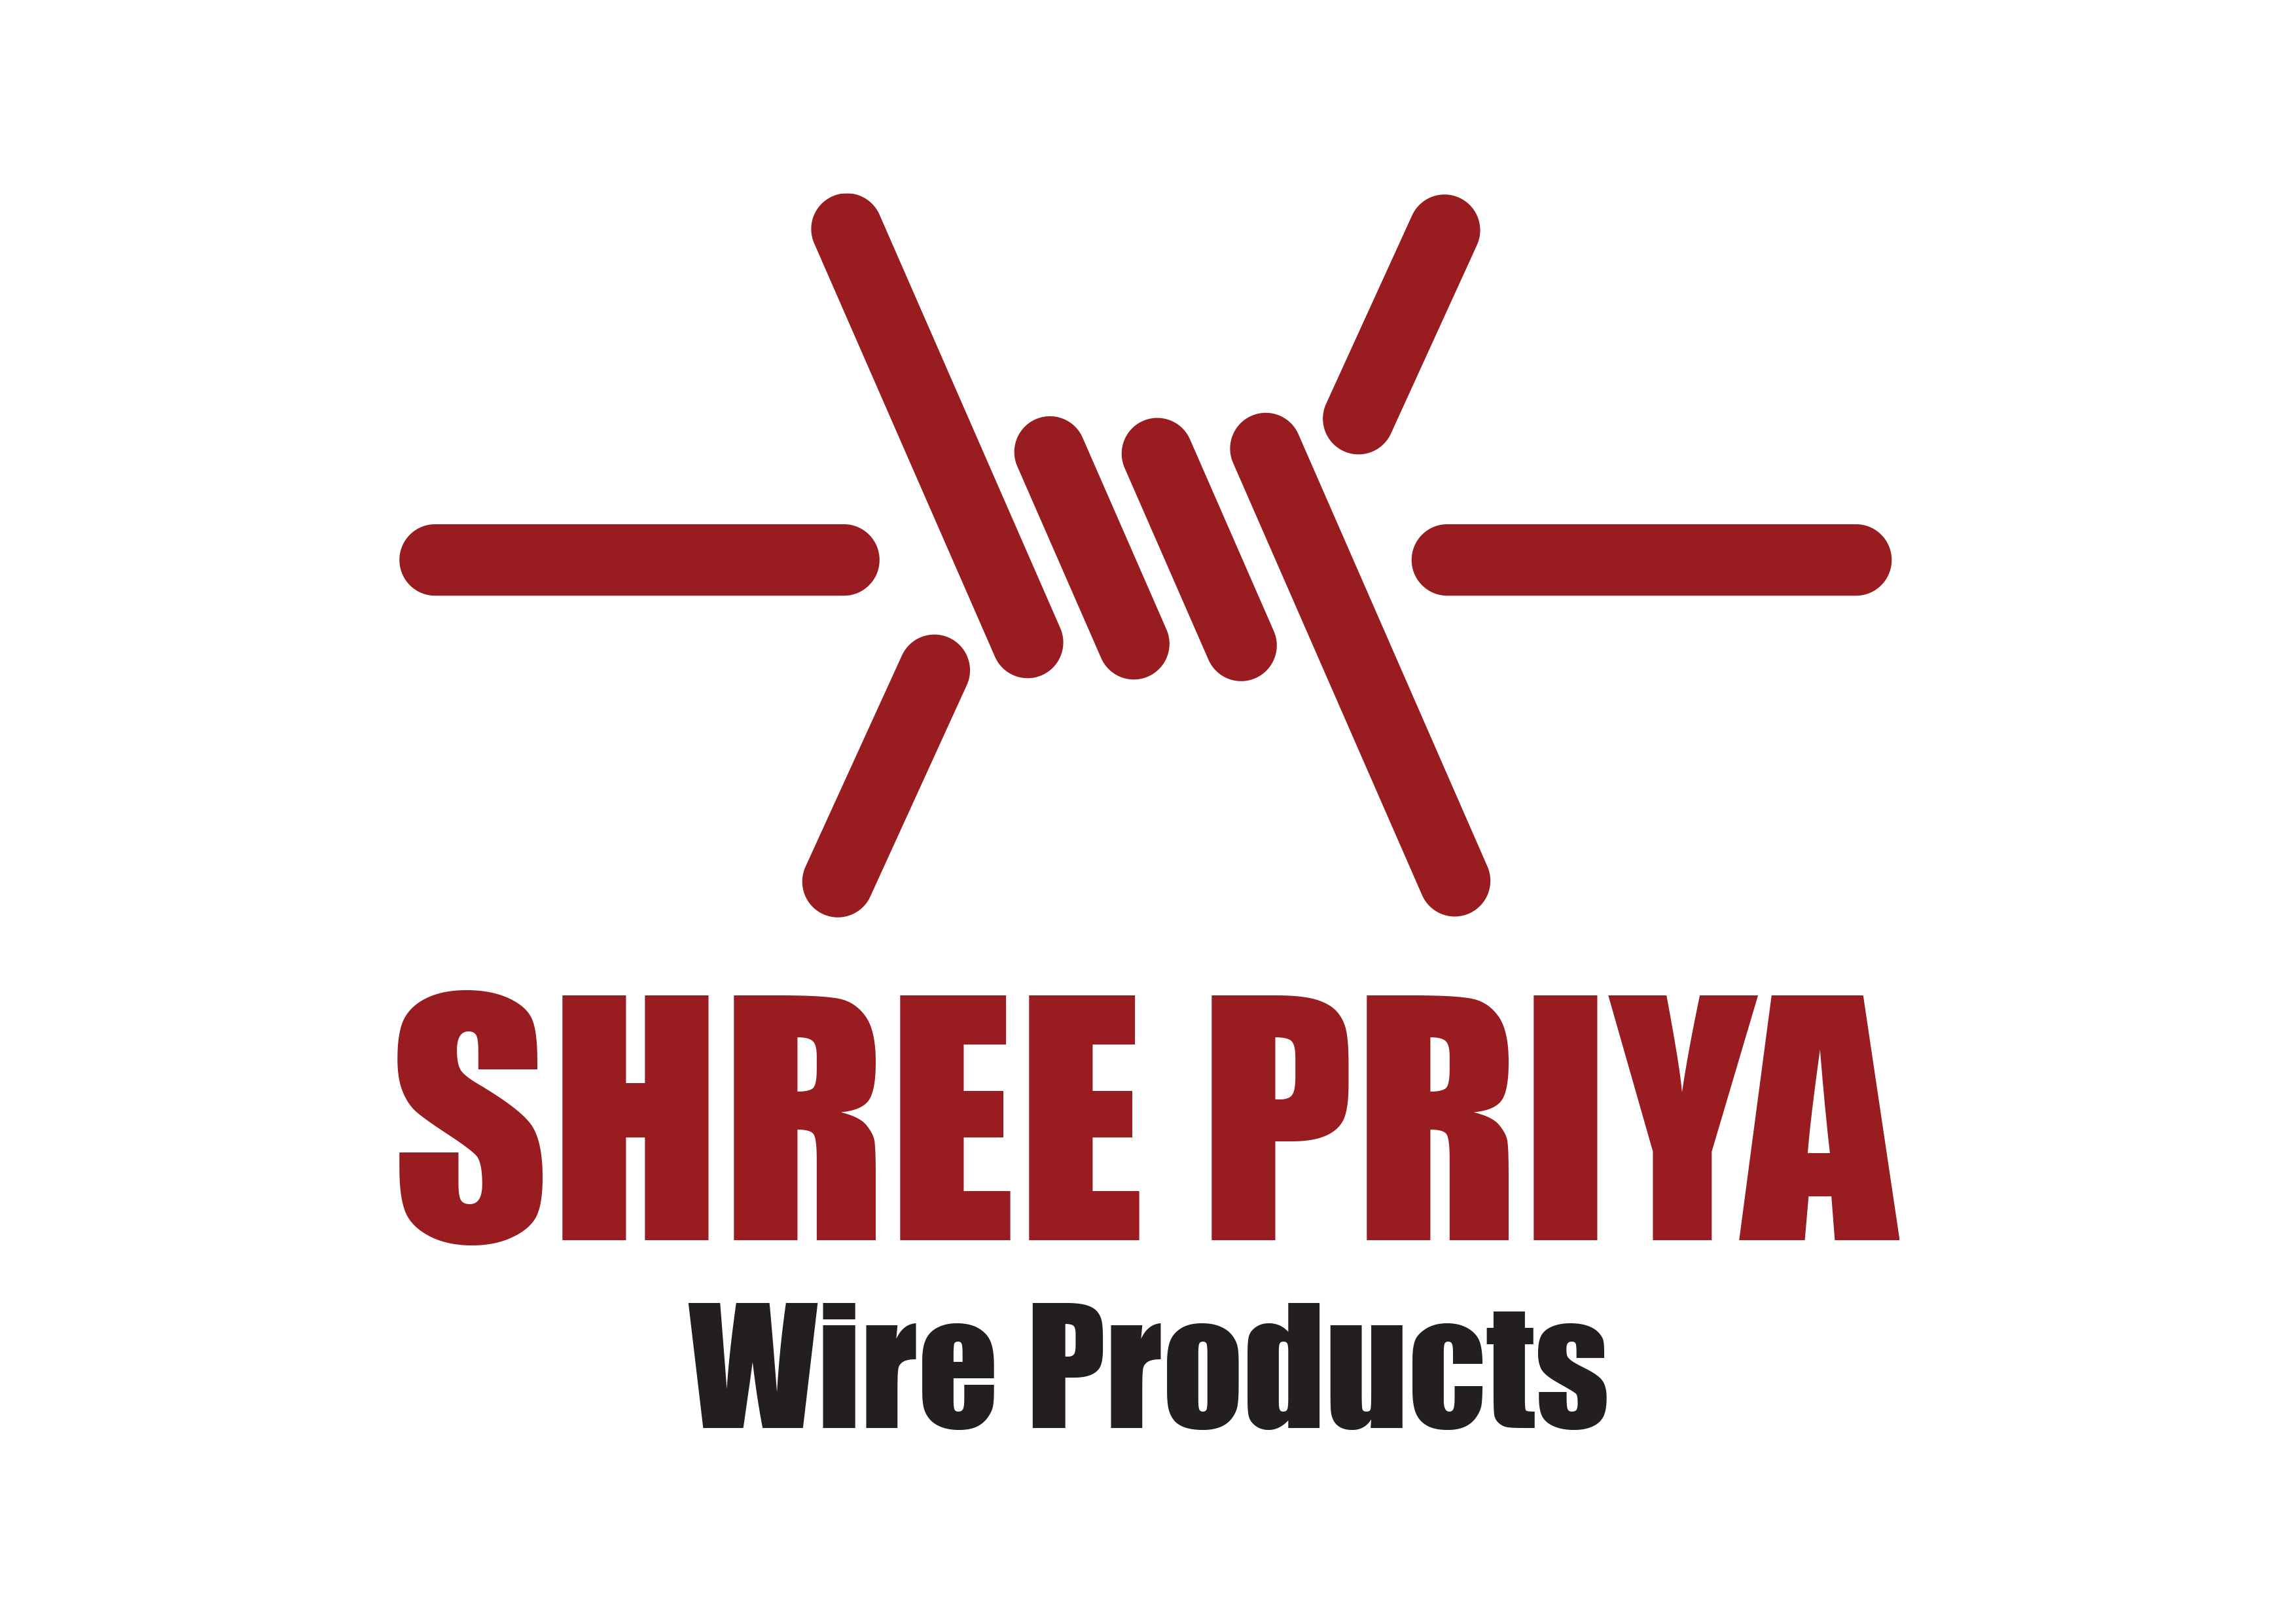 Shree Priya Wire Products